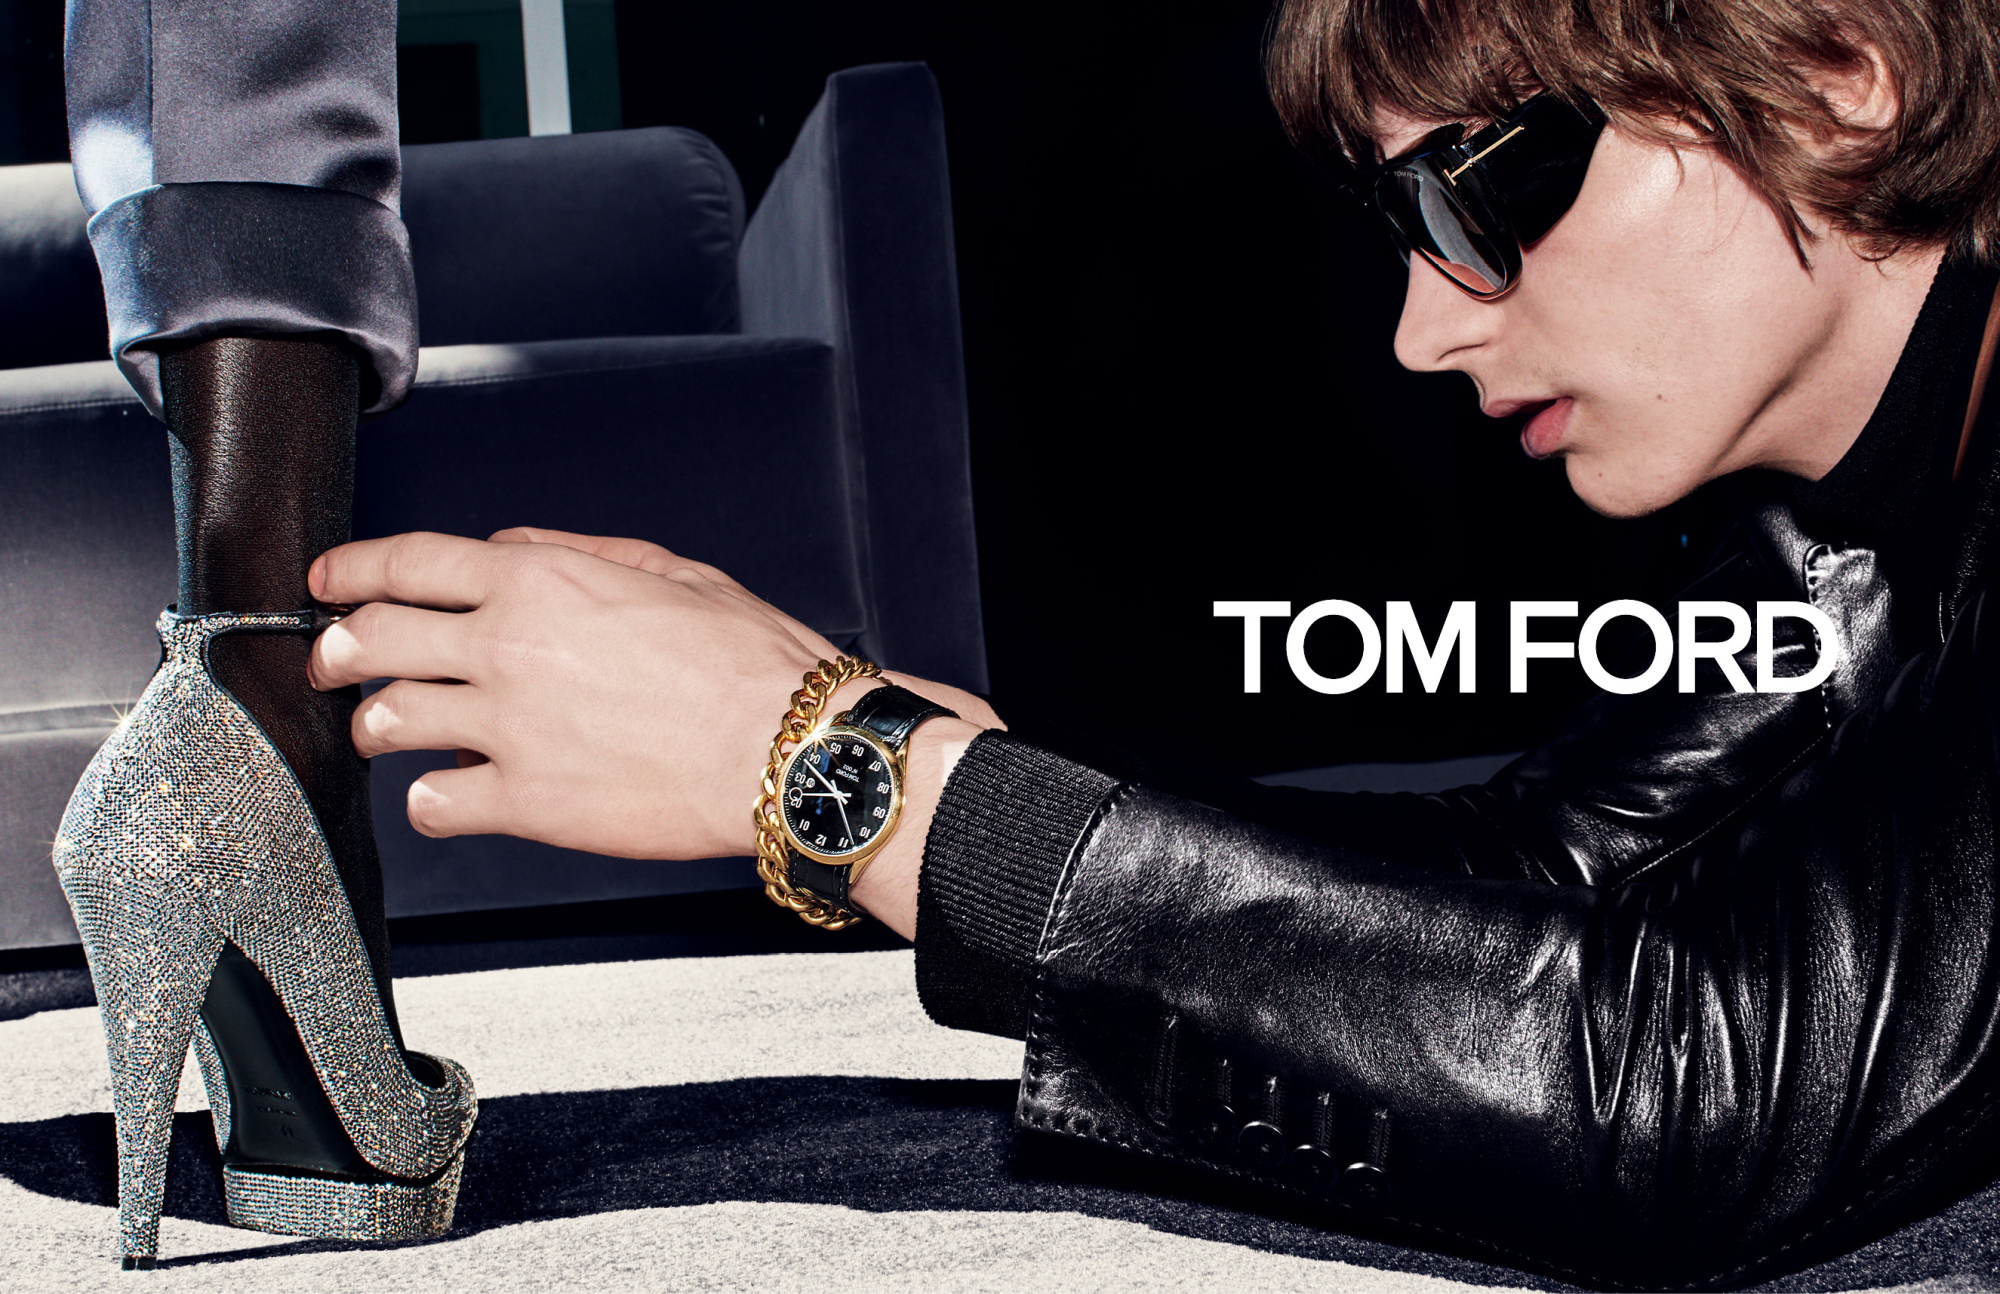 Tom Ford's Fall Ads Spotlight Individual Style – WWD